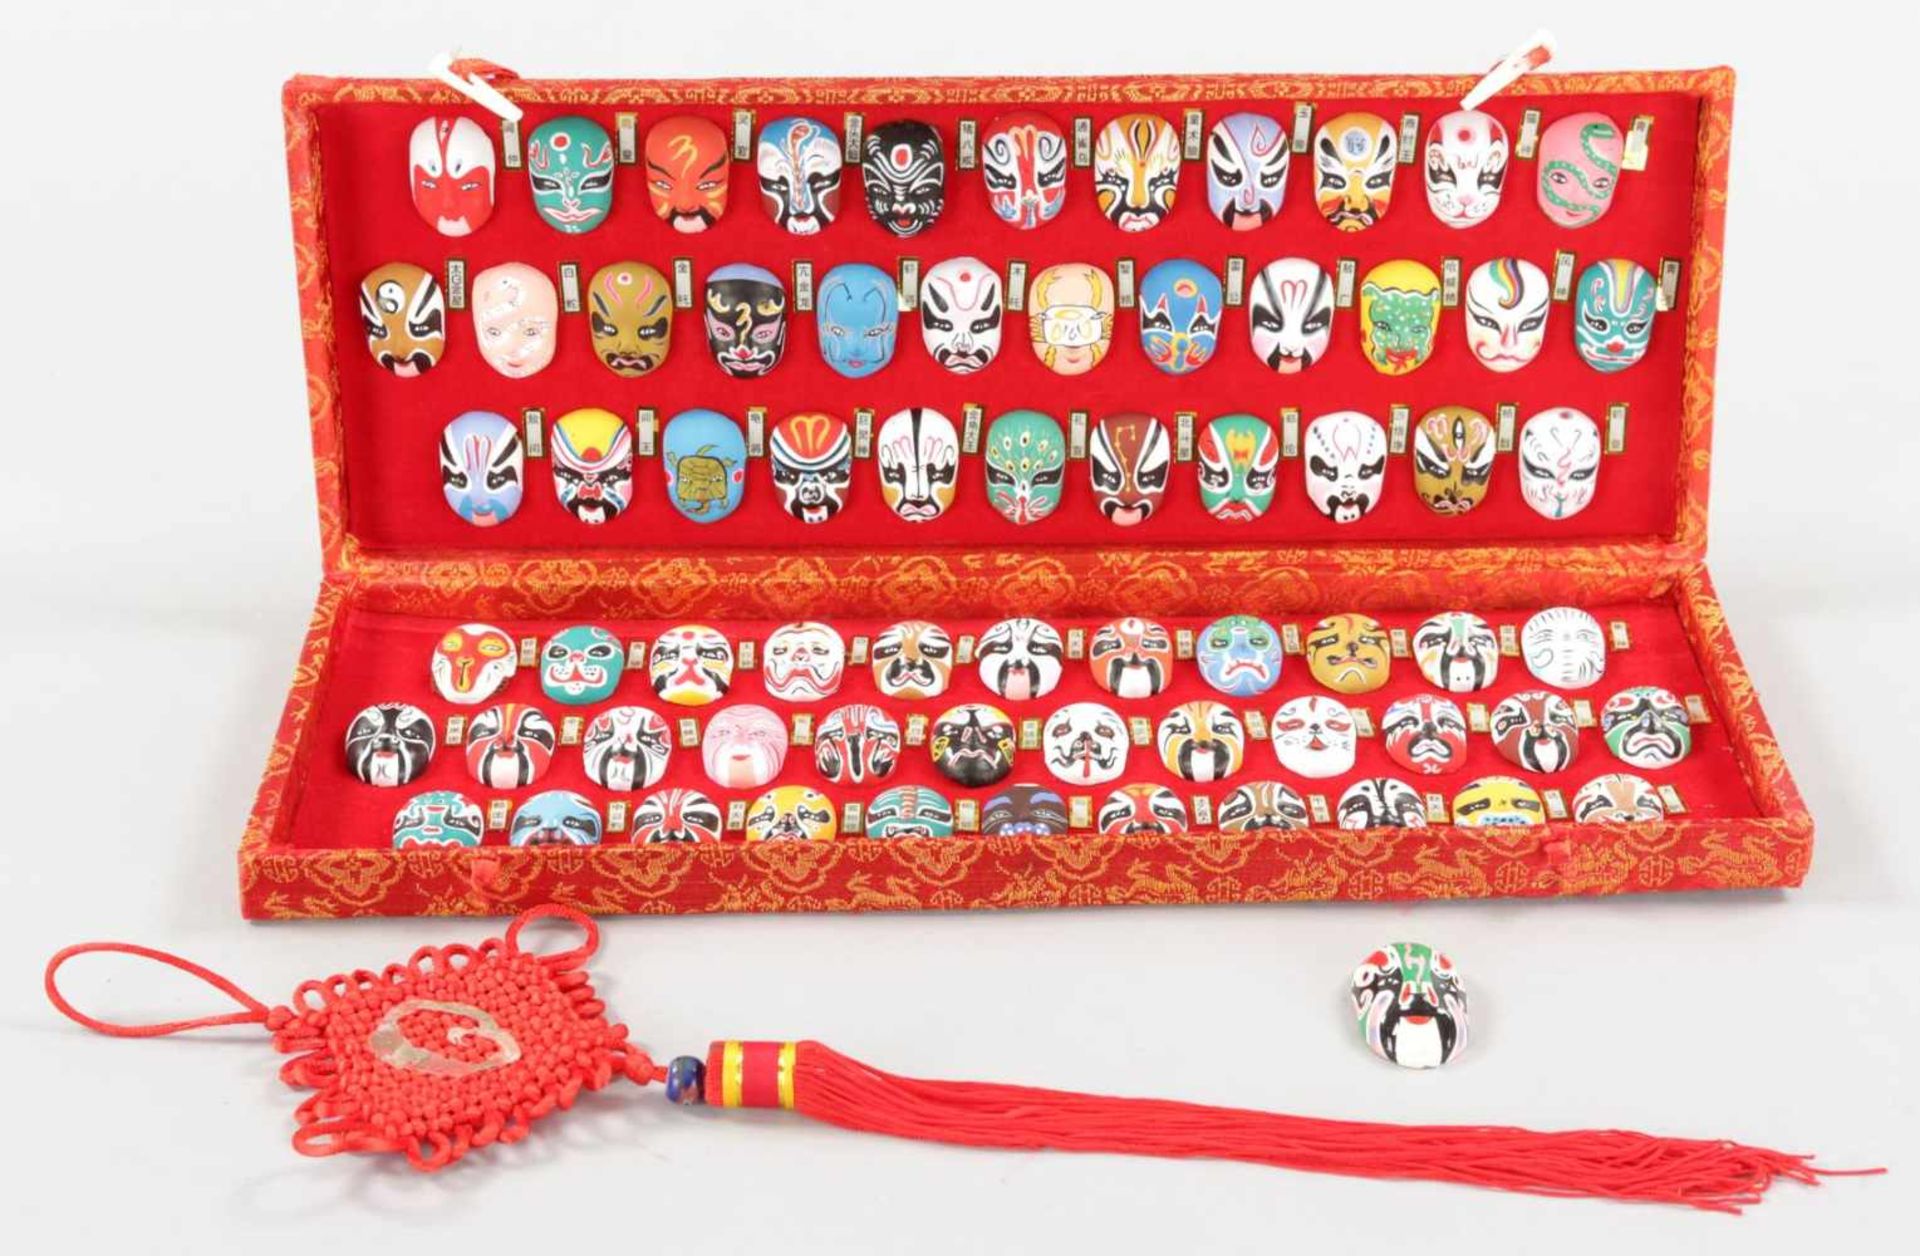 Miniaturmasken der Peking-OperGips u.a., China, 20.Jh. In Originalkartonage die 66 kl. bunt bemalten